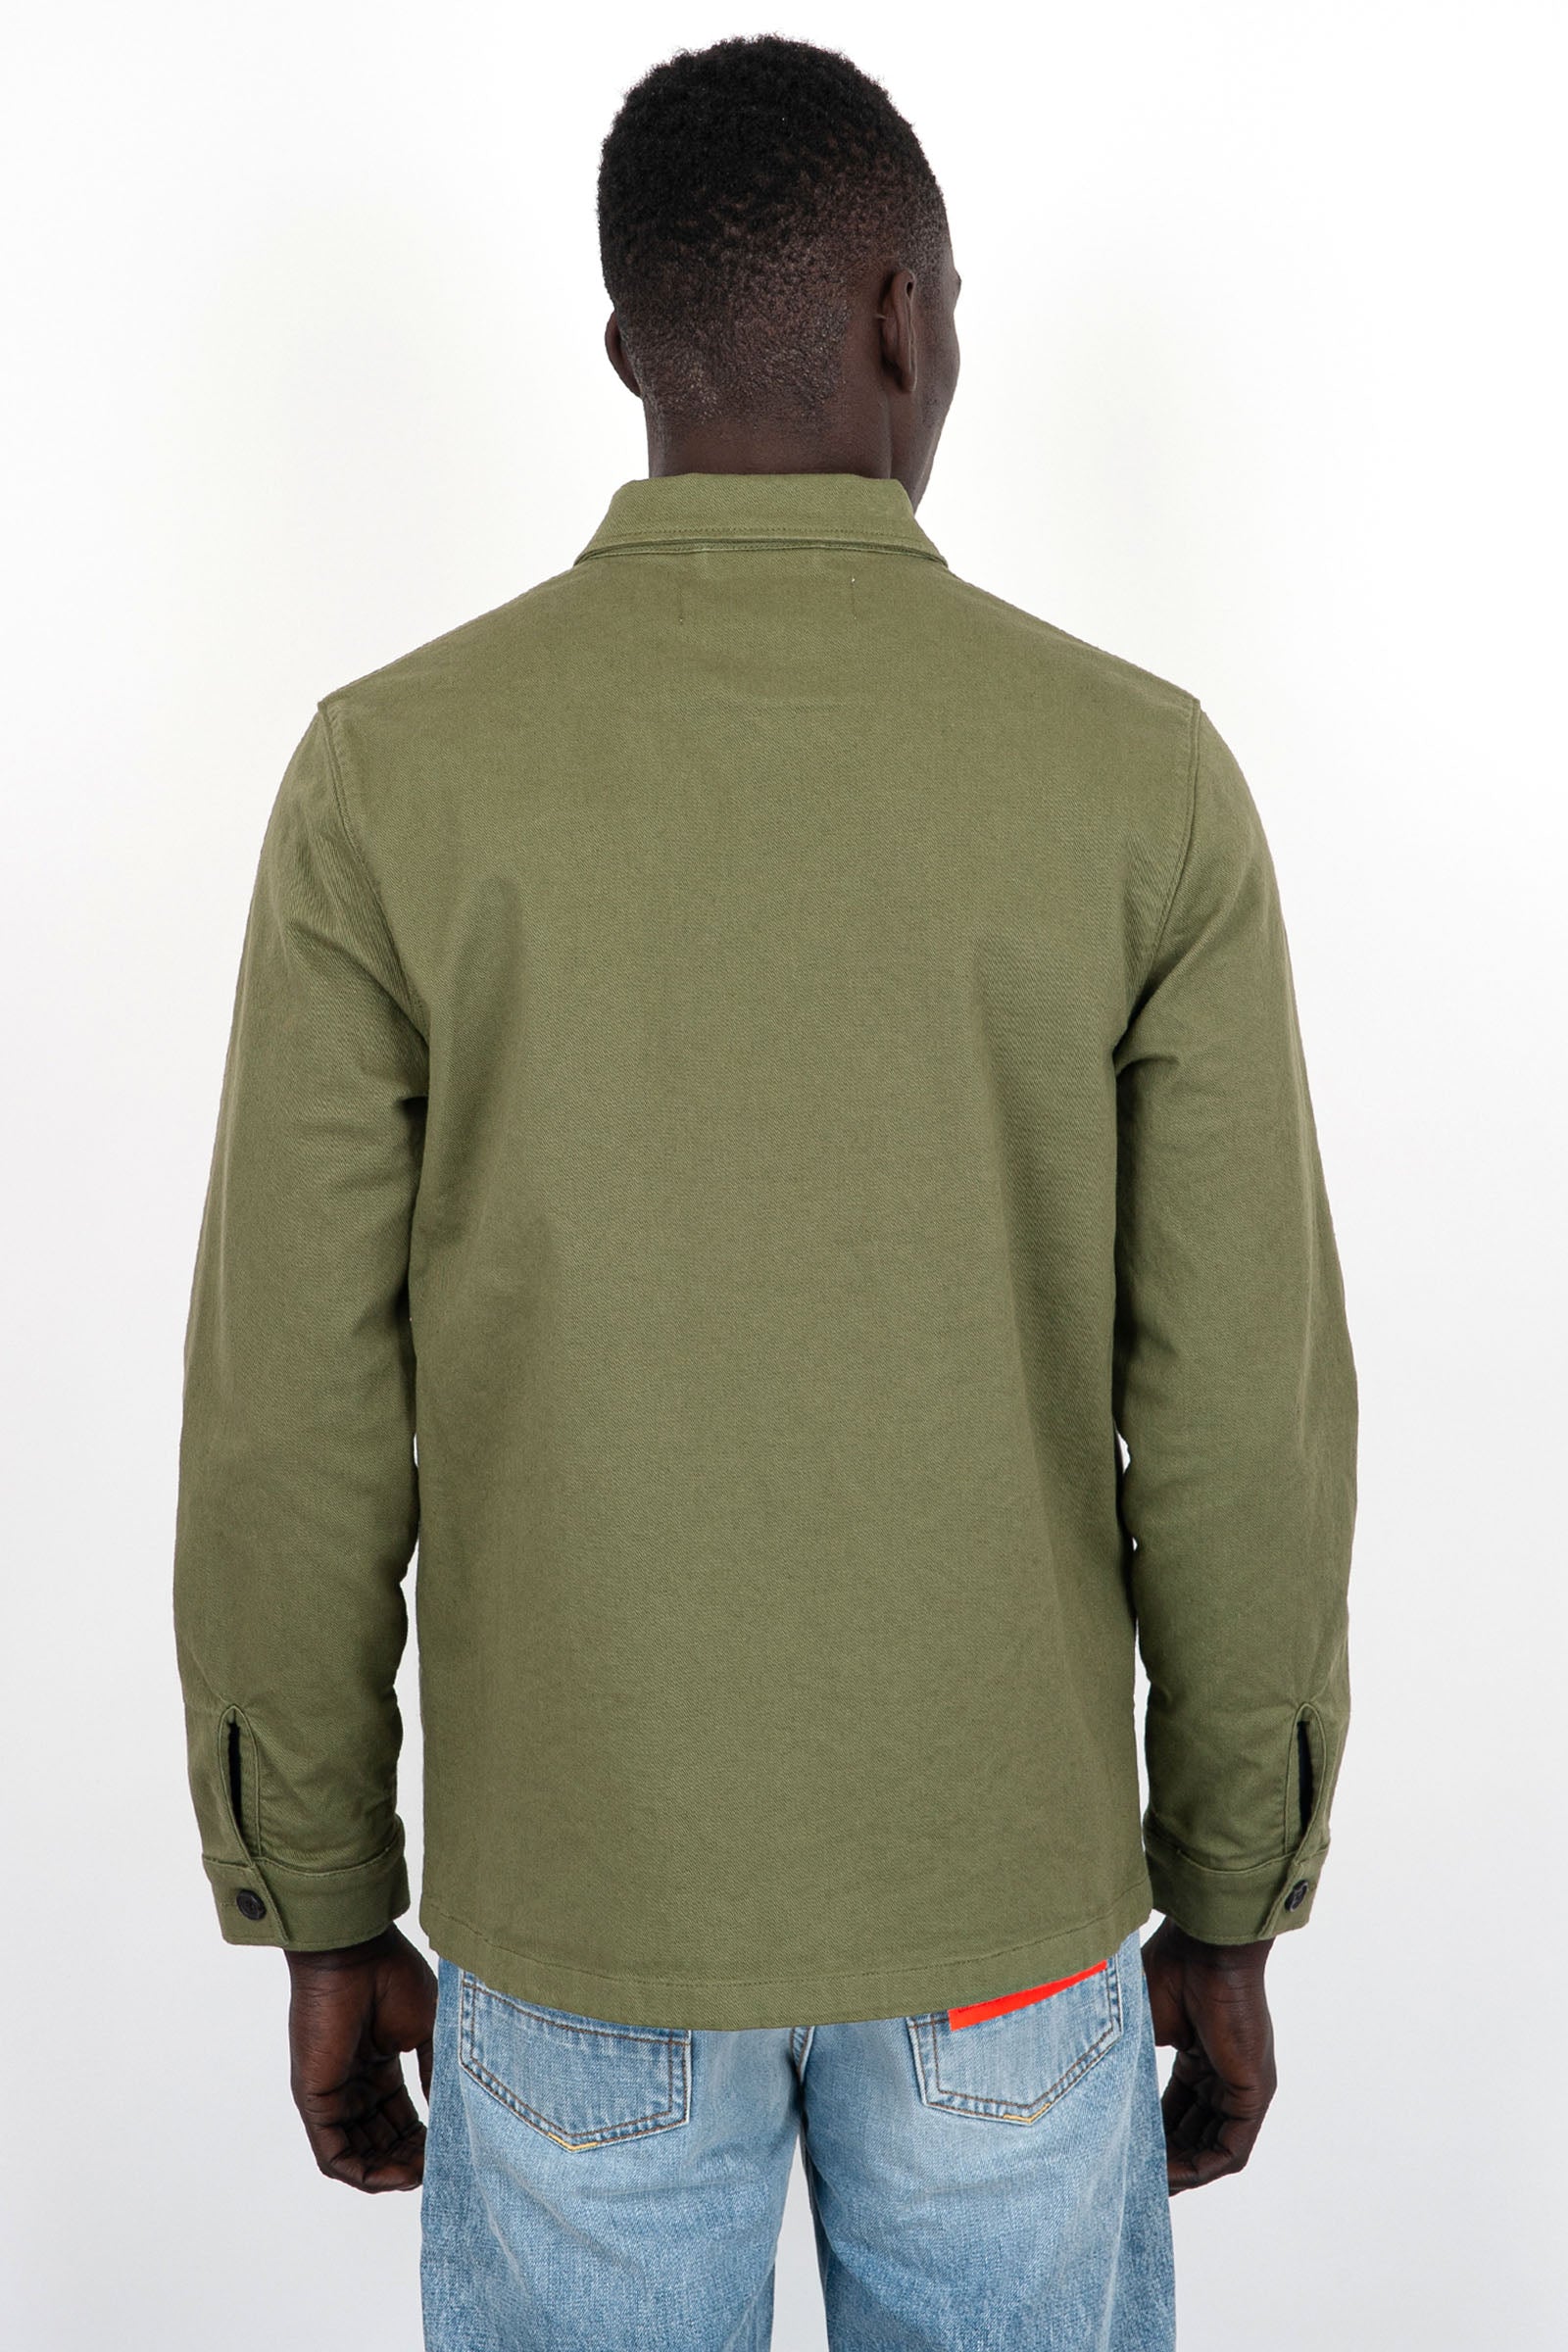 Department Five Overshirt Broz Cotton Military Green - 4